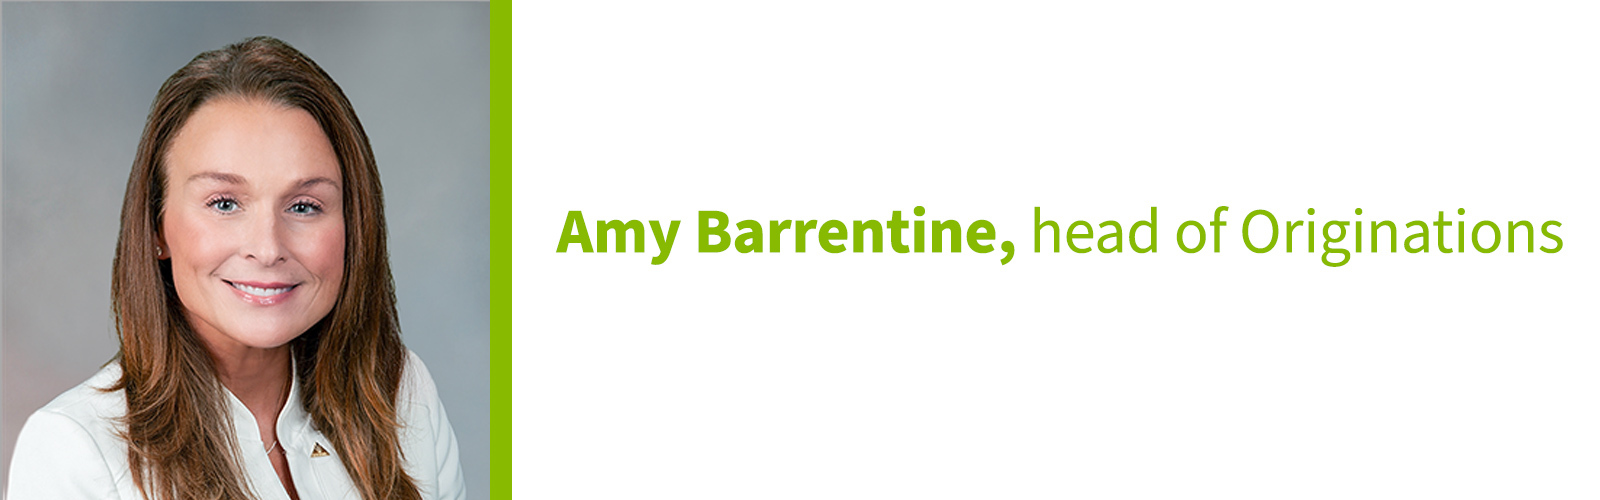 Amy Barrentine, head of Originations